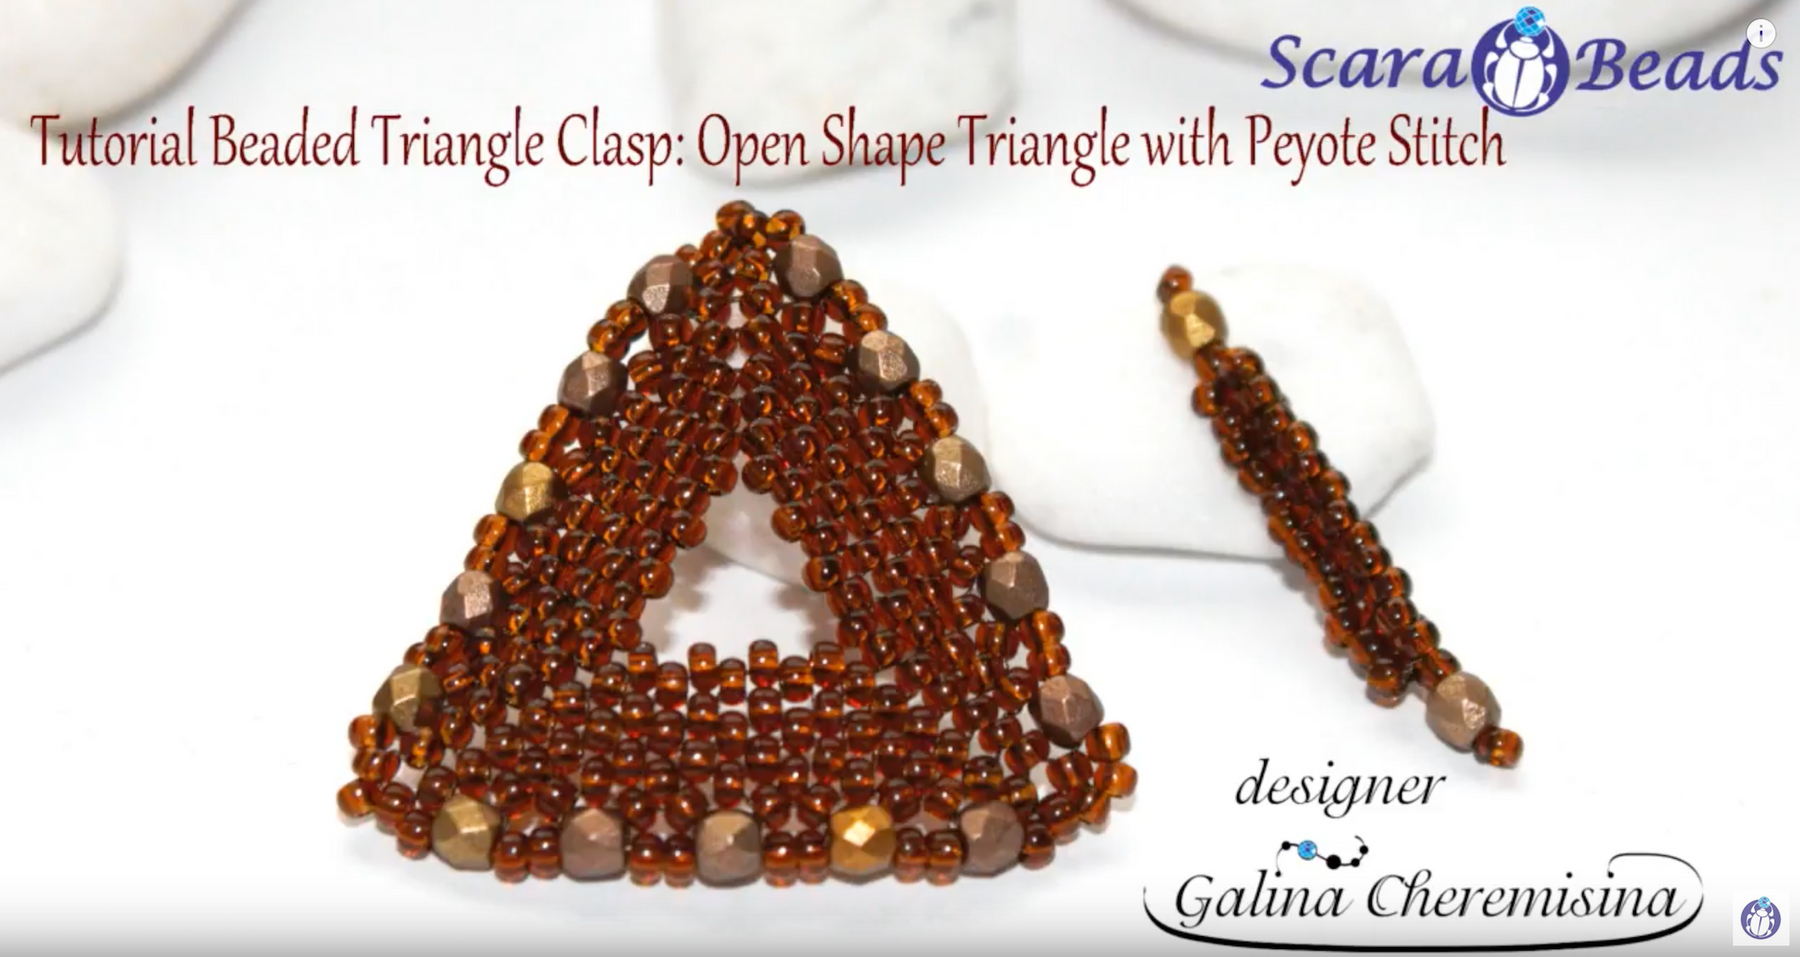 DIY: Beaded Triangle Clasp "Open Shape Triangle with Peyote Stitch"